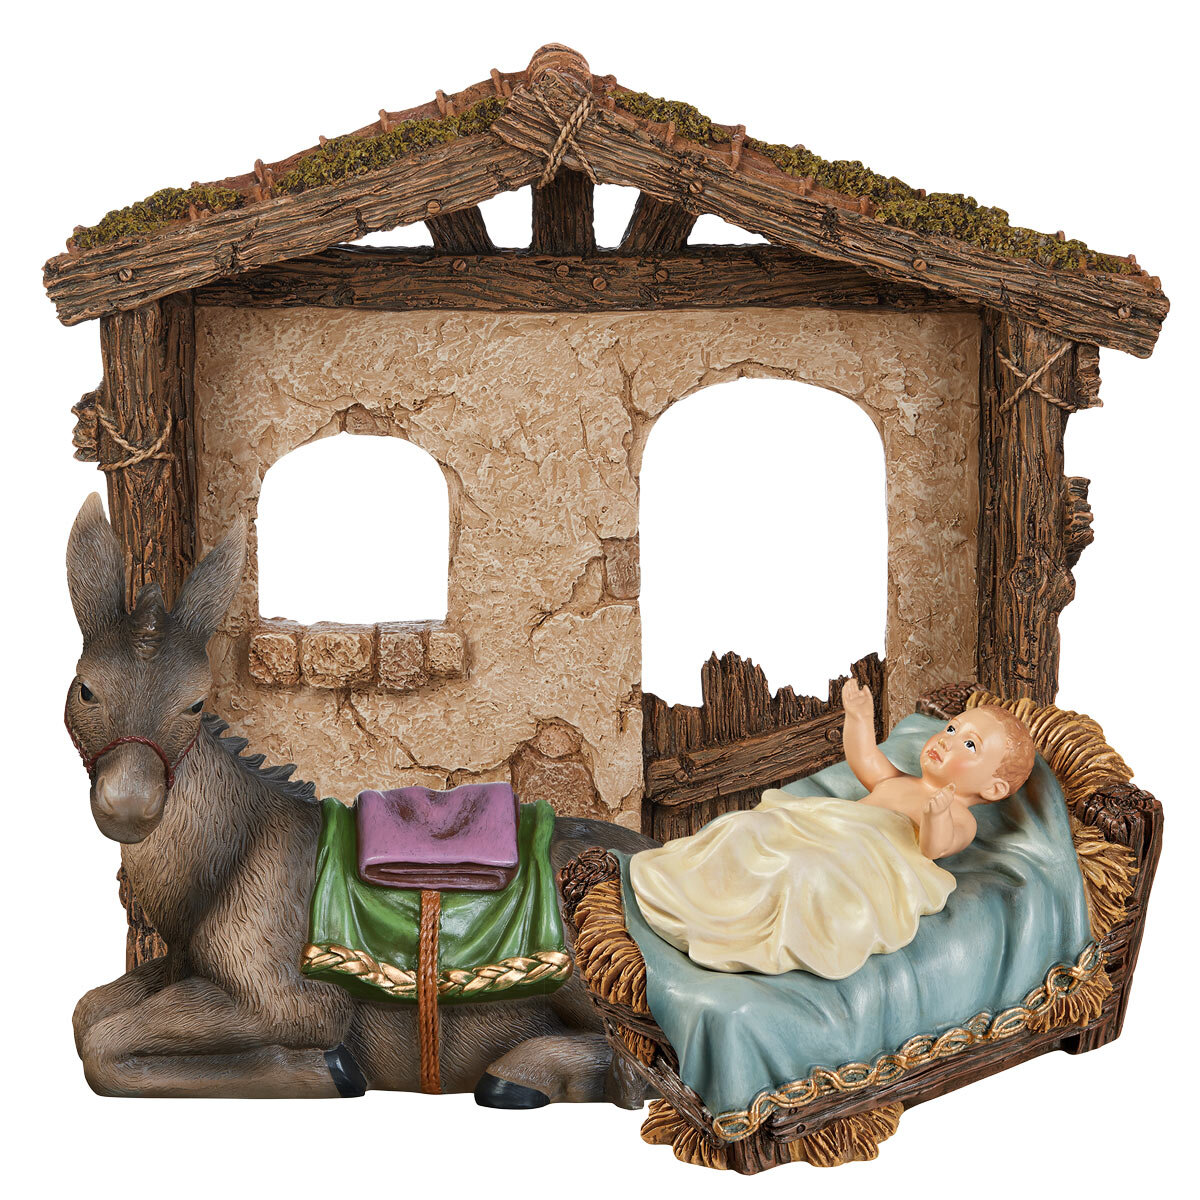 Buy KS Nativity Set Group3 Image at Costco.co.uk